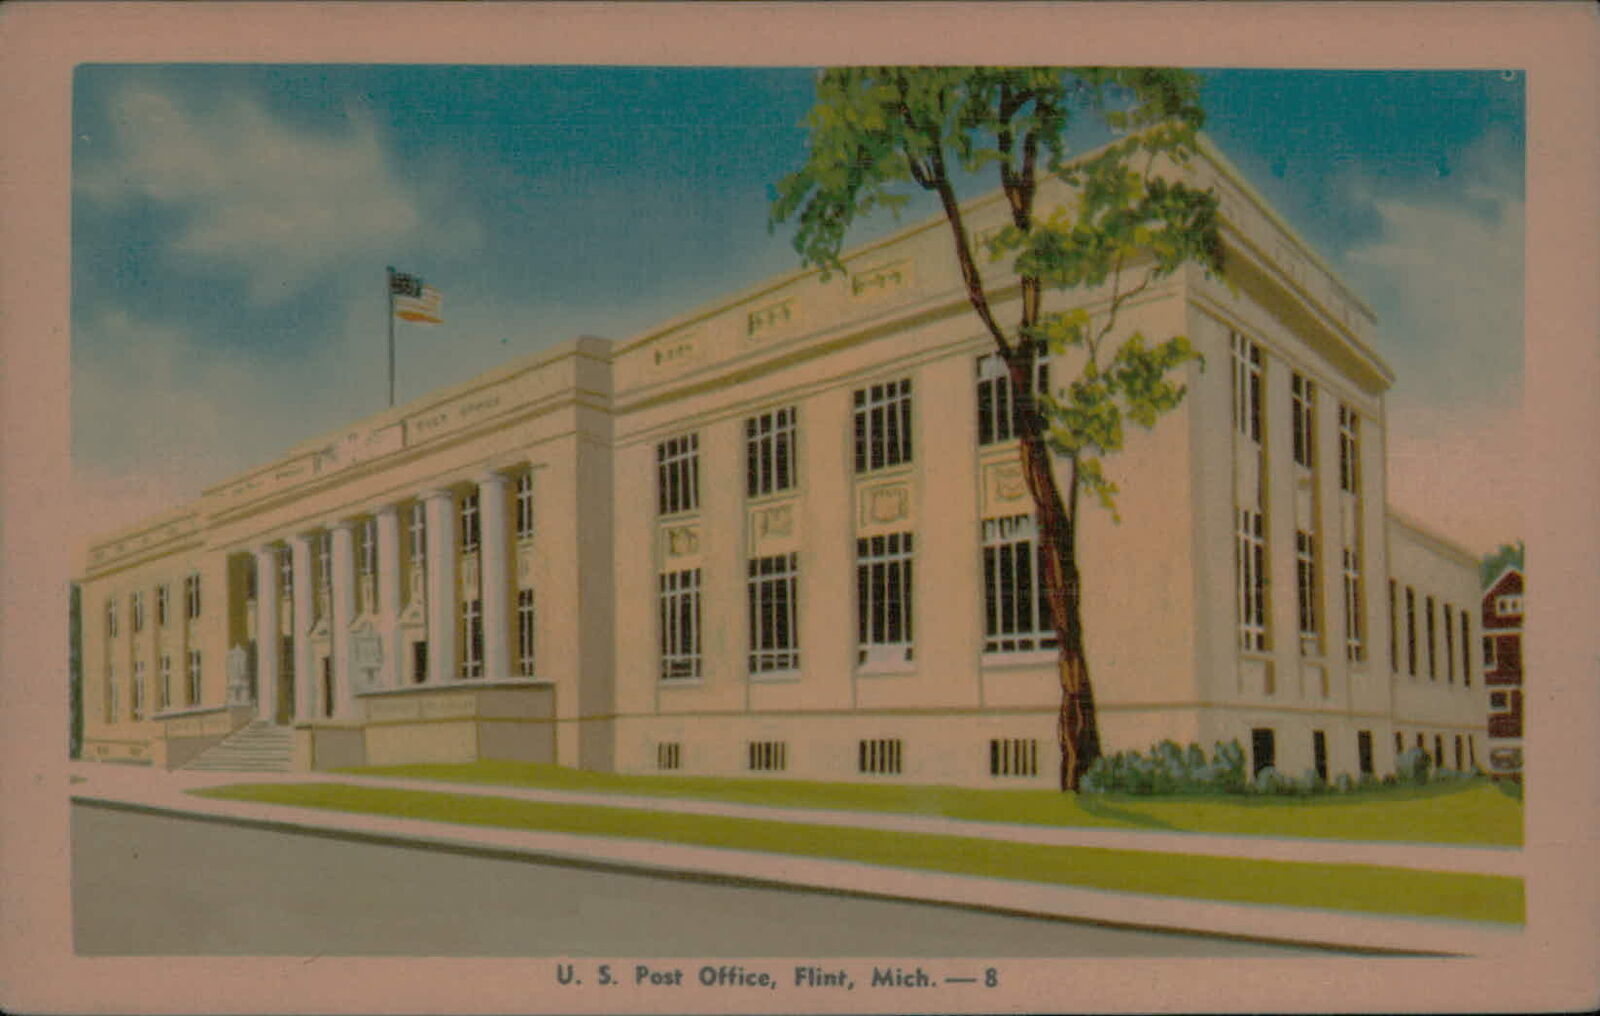 Postcard: non U.S. Post Office, Flint, Mich. 8